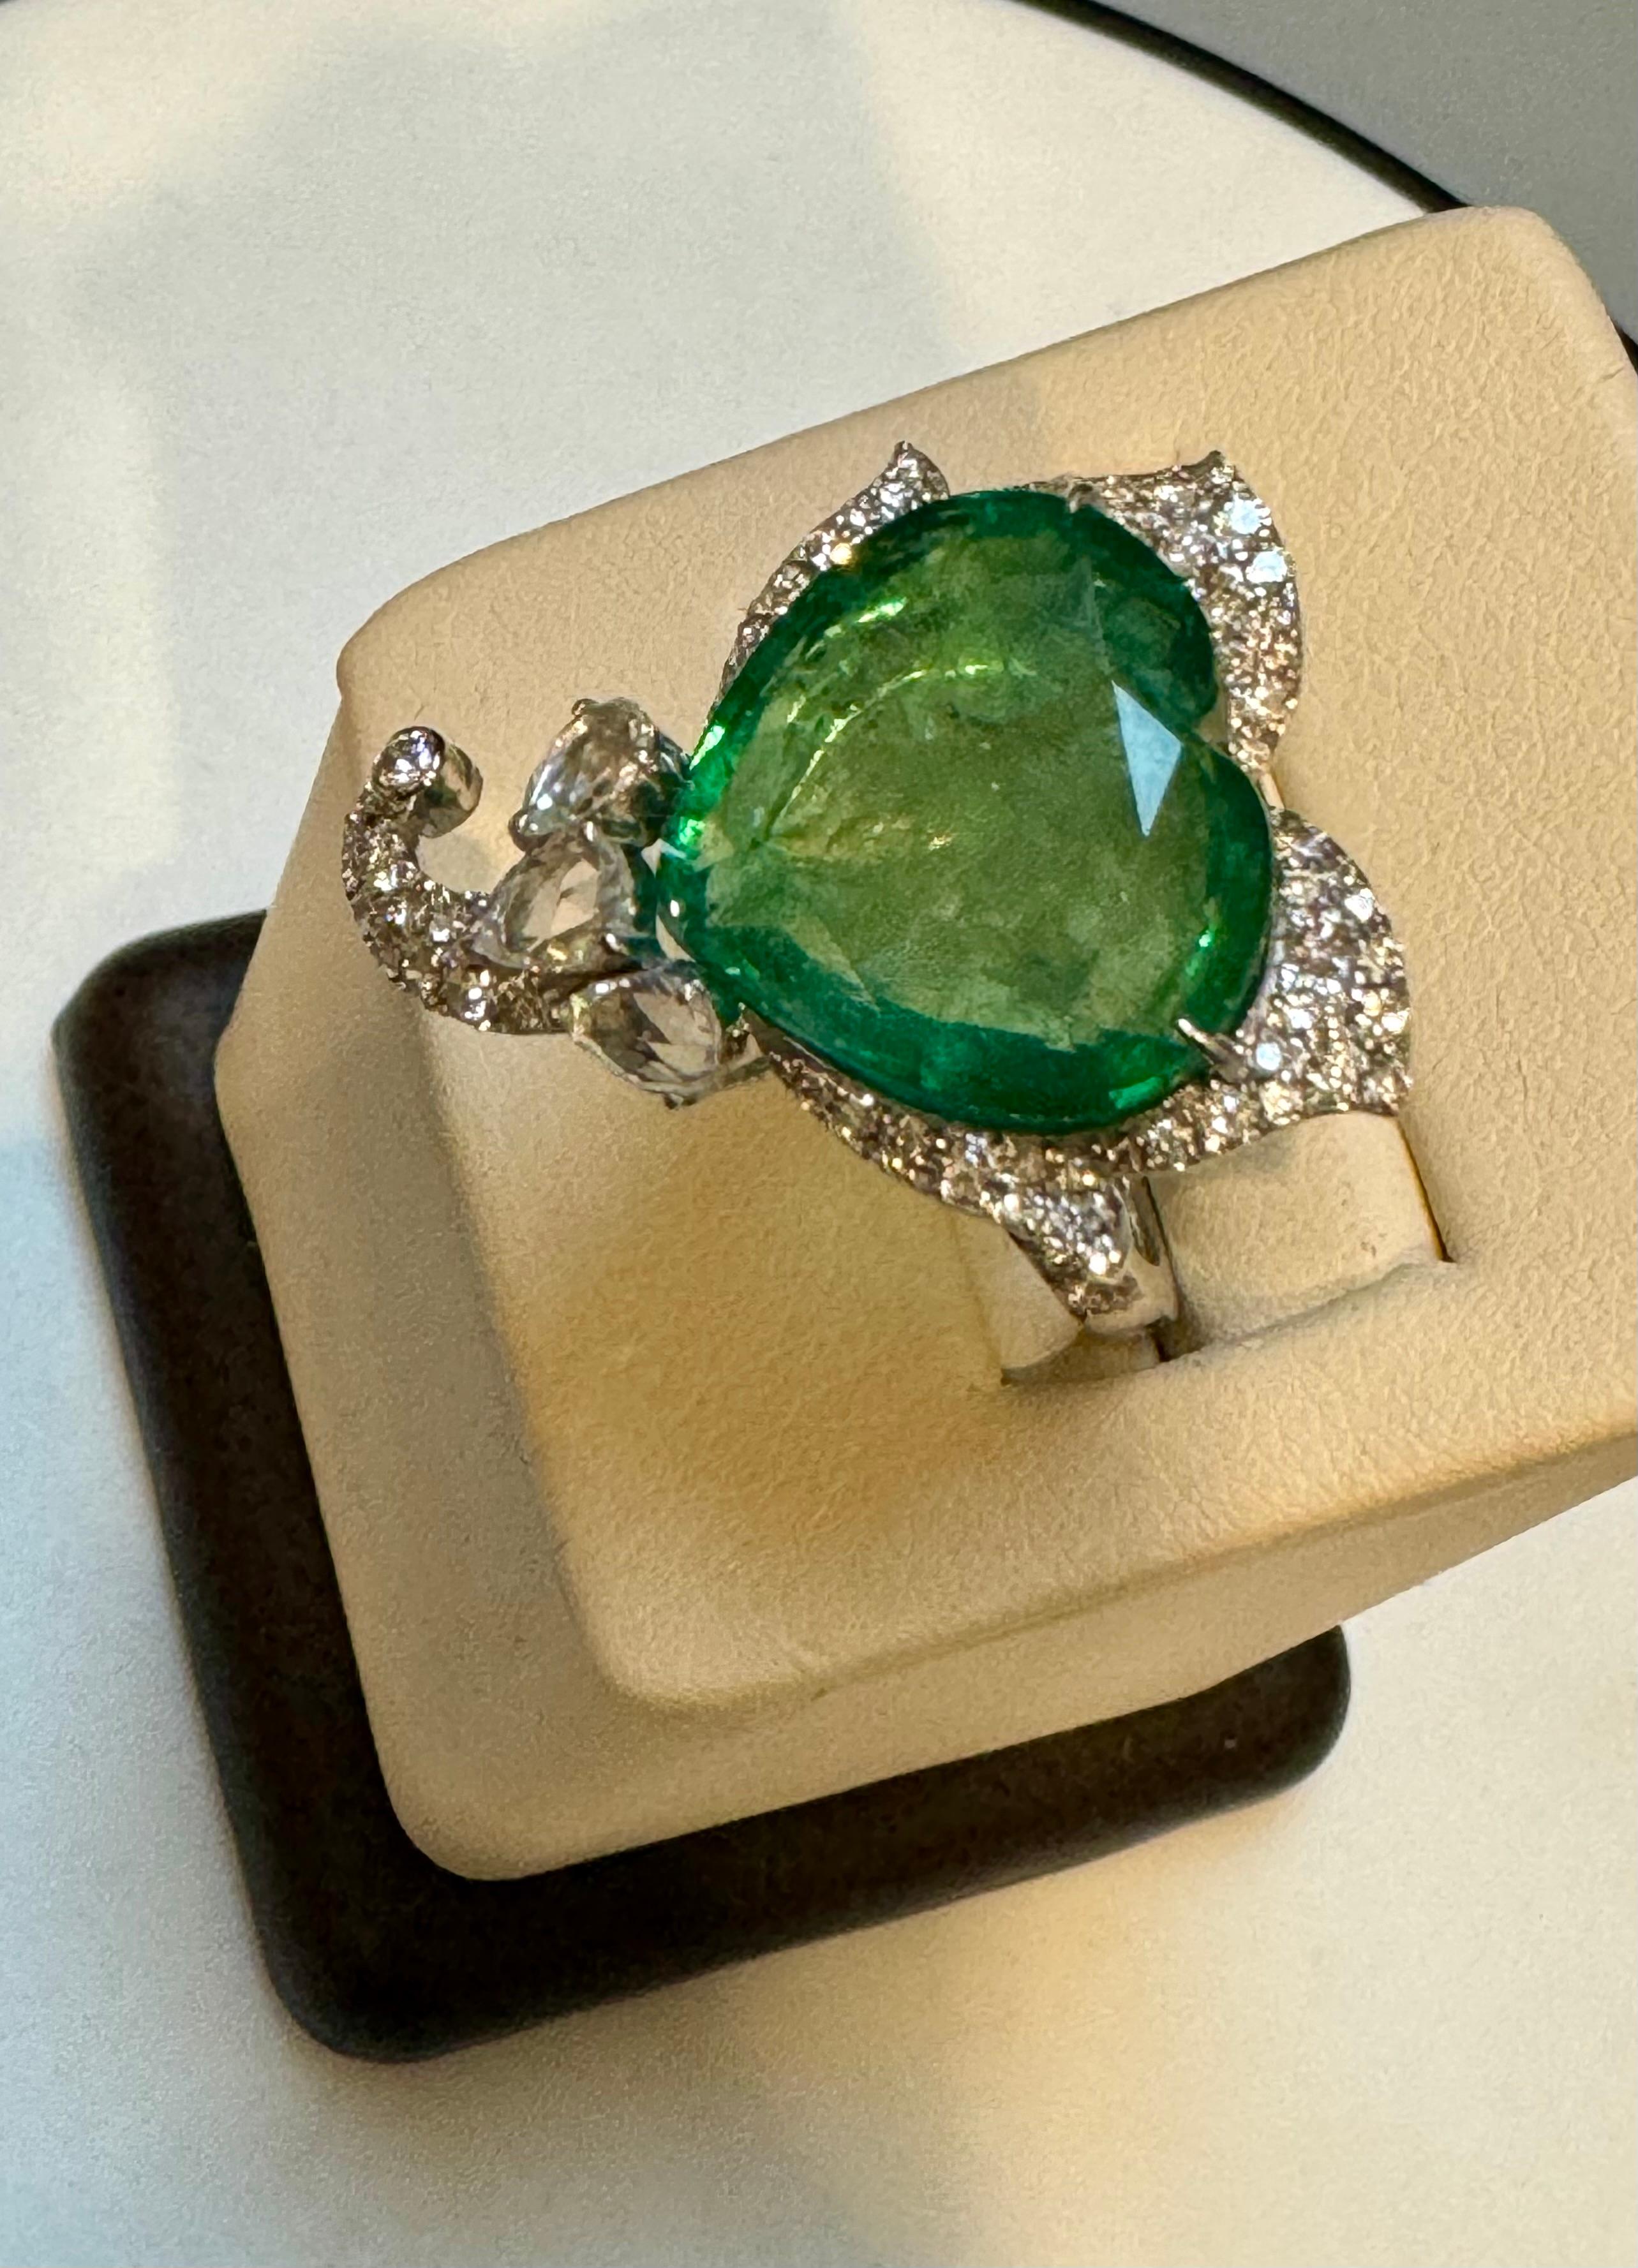 13 Ct  Zambian Heart Cut Emerald & 1.5 Ct Diamond Ring, 18 Kt Gold Size 8.5  For Sale 1